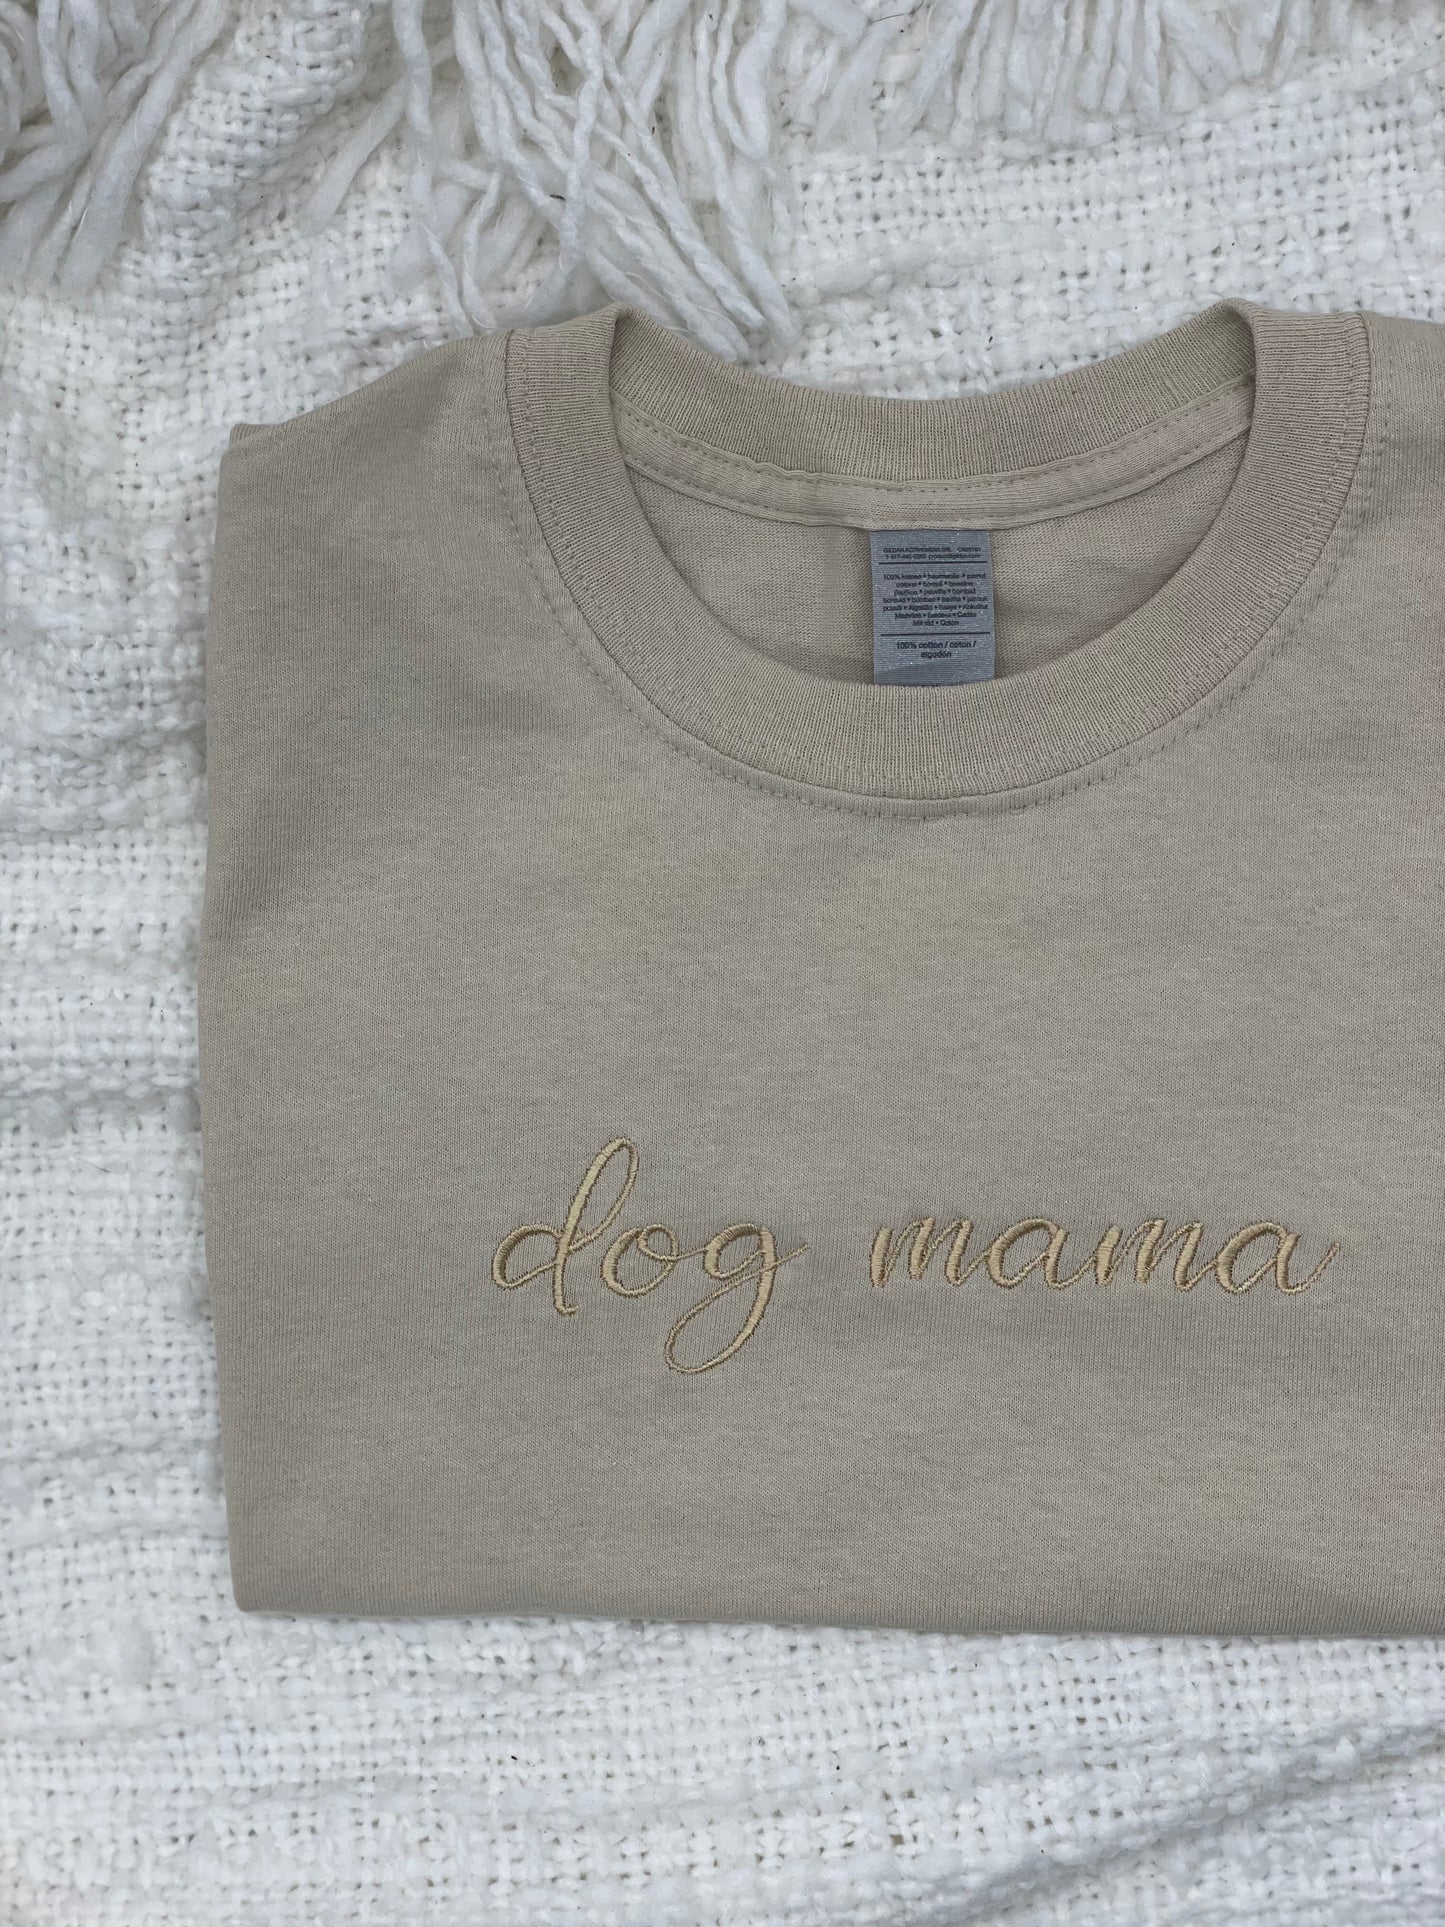 Dog mama | Embroidered T-shirt